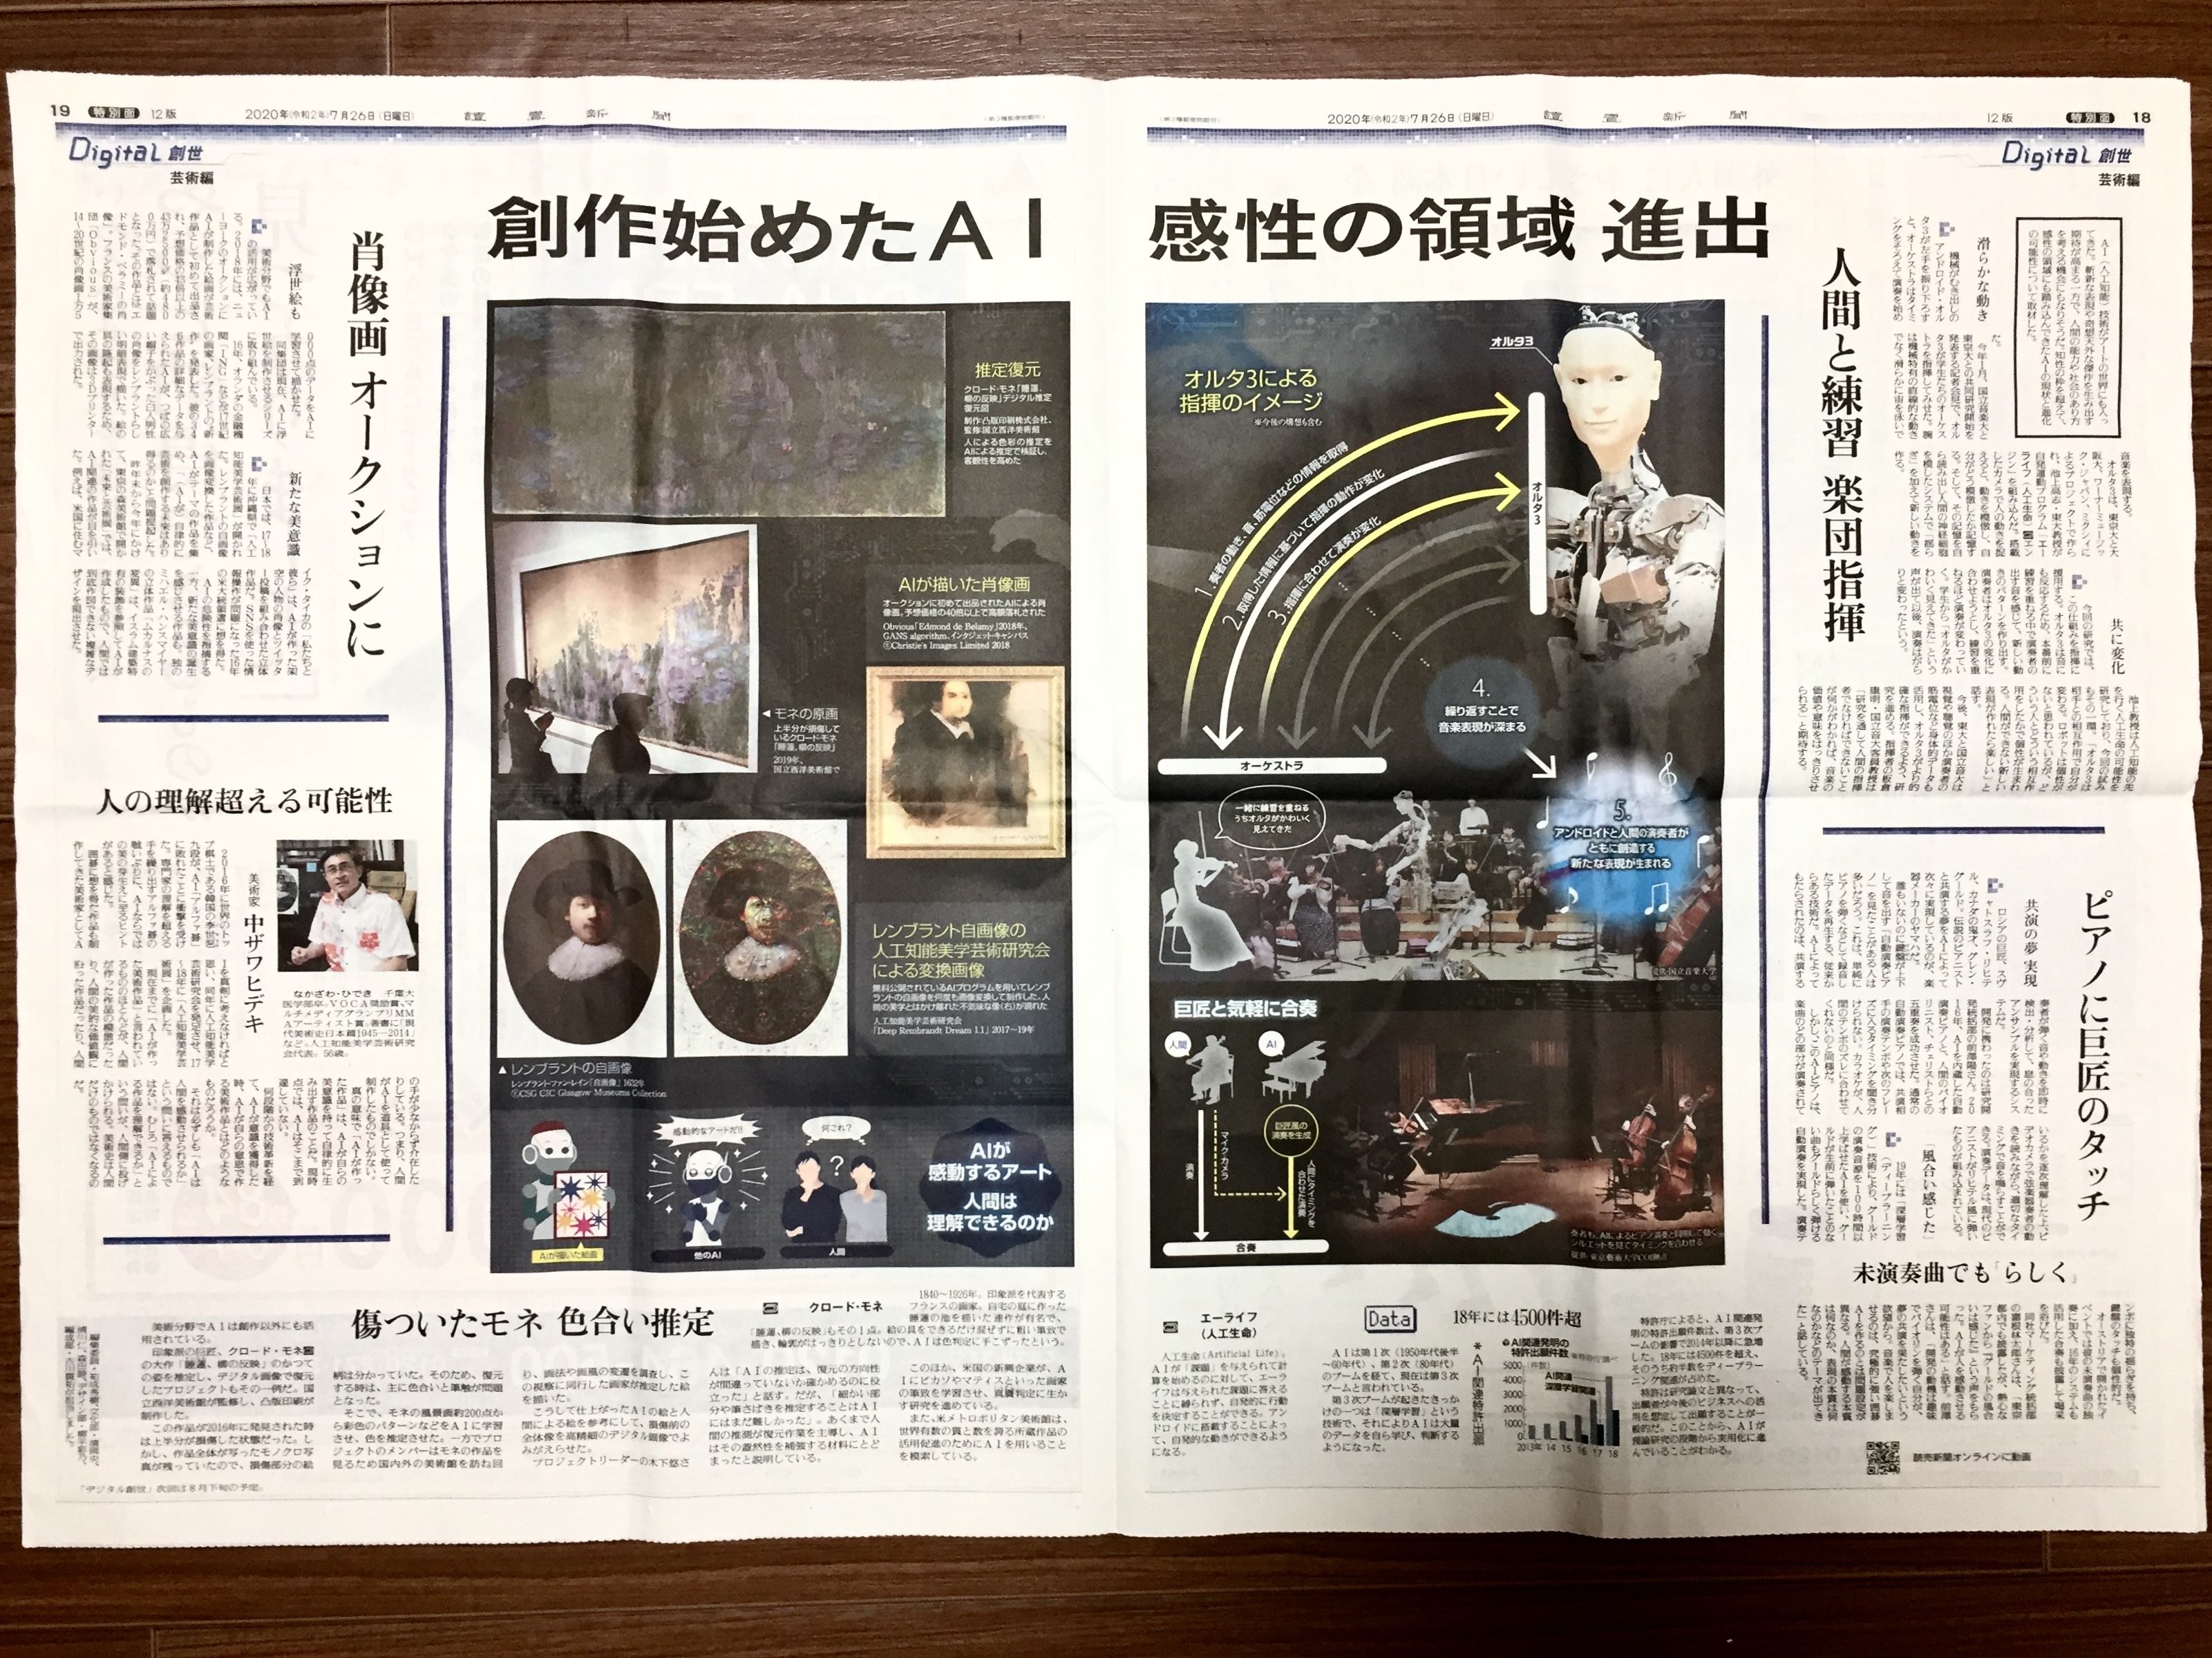 “AI Started Creation. Advanced into the Territory of Sensibility.” [Digital Genesis] -Art- (Yomiuri Shimbun)